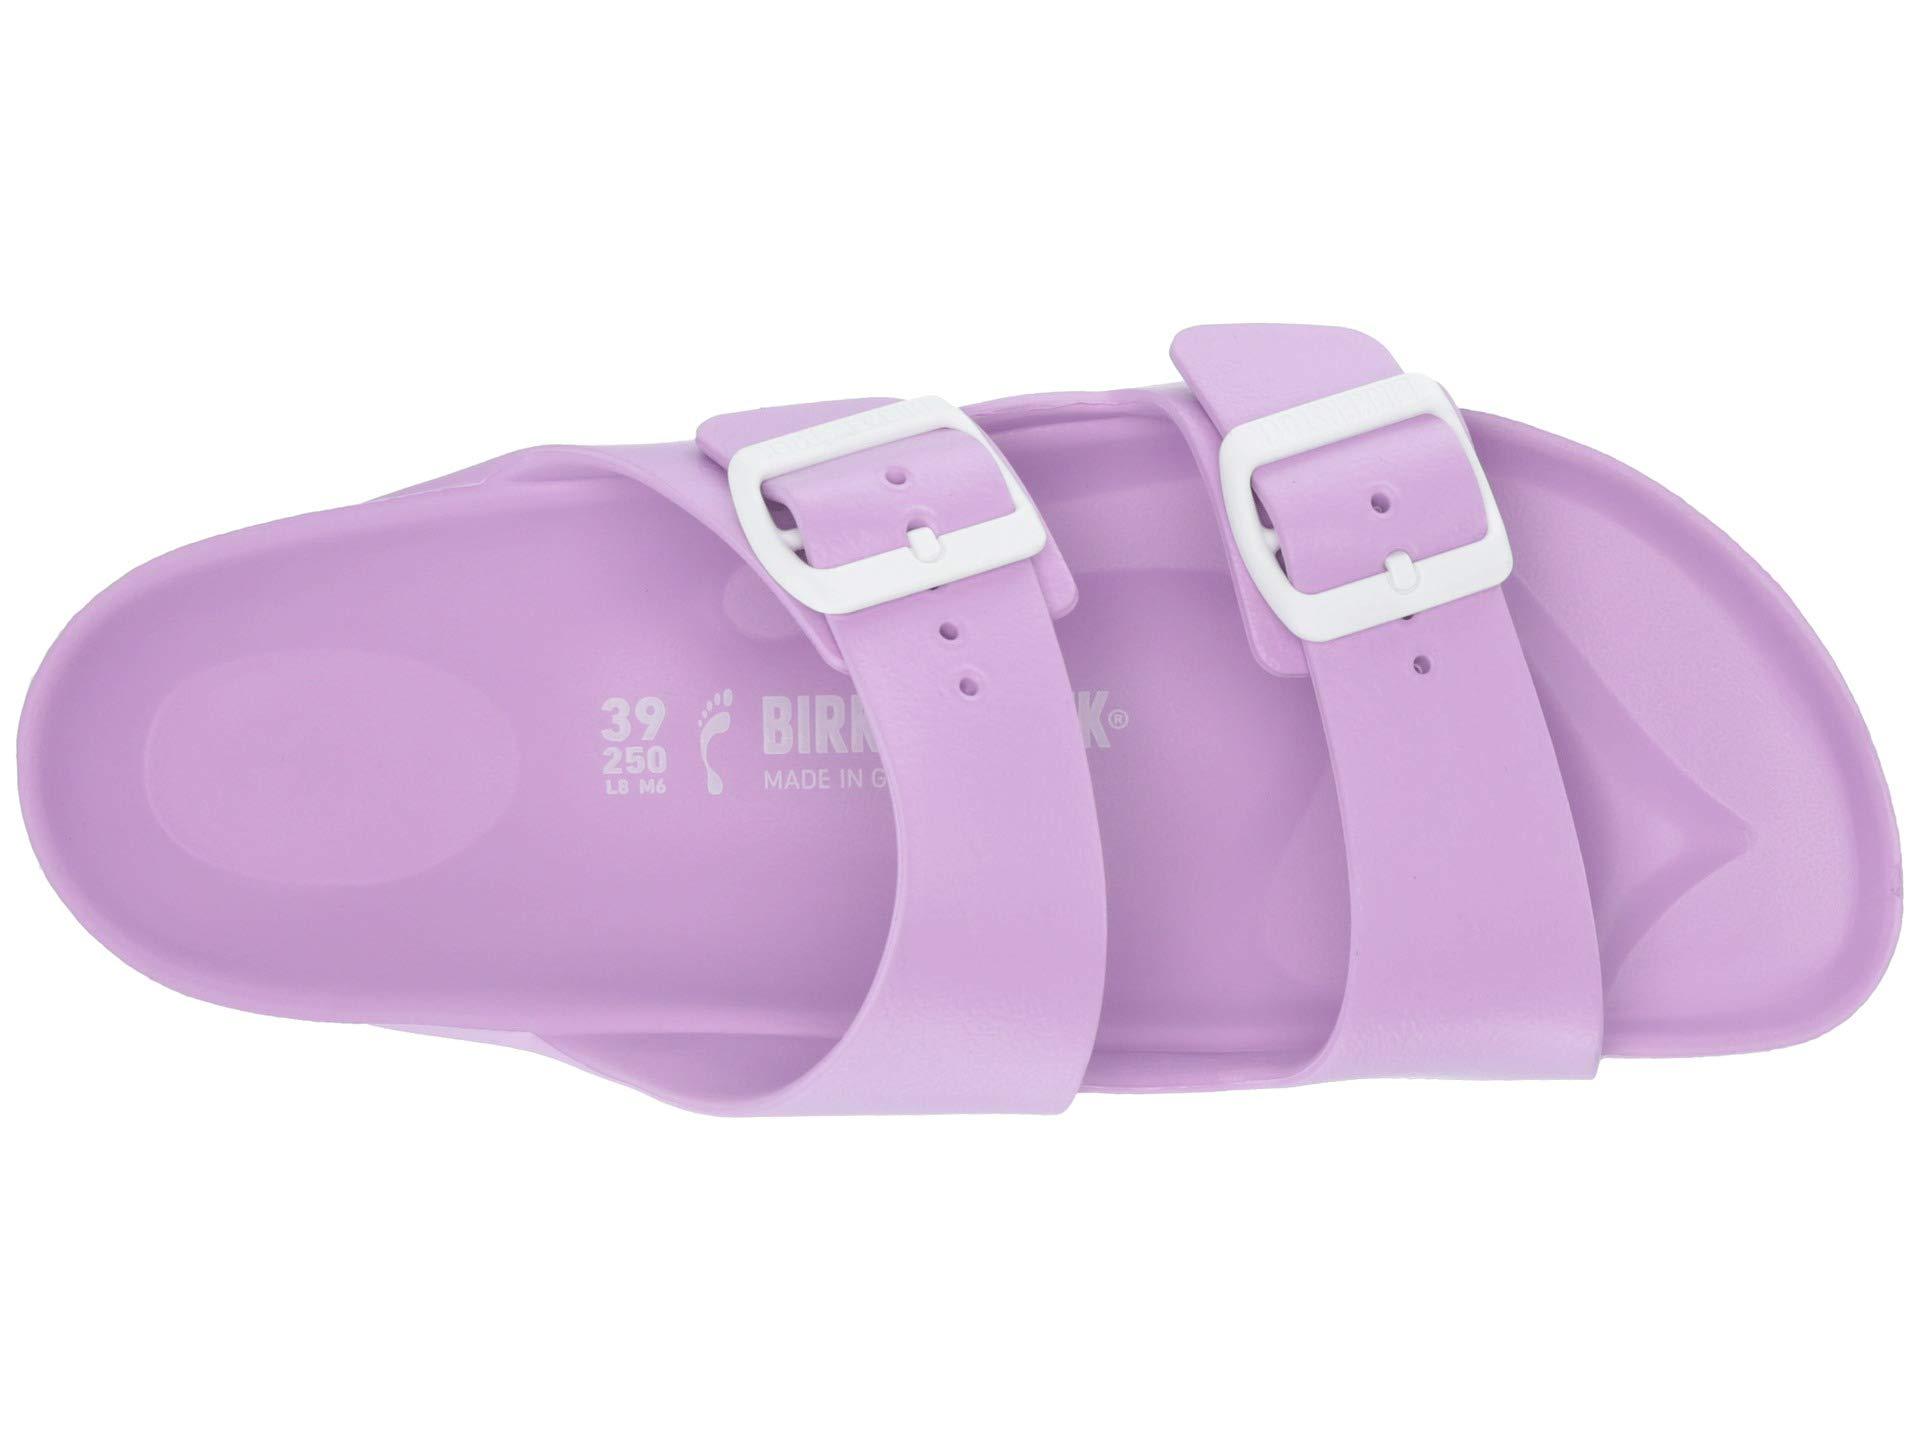 Birkenstock Arizona Eva Essentials Slide Sandals in Lilac (Purple) - Save  85% - Lyst